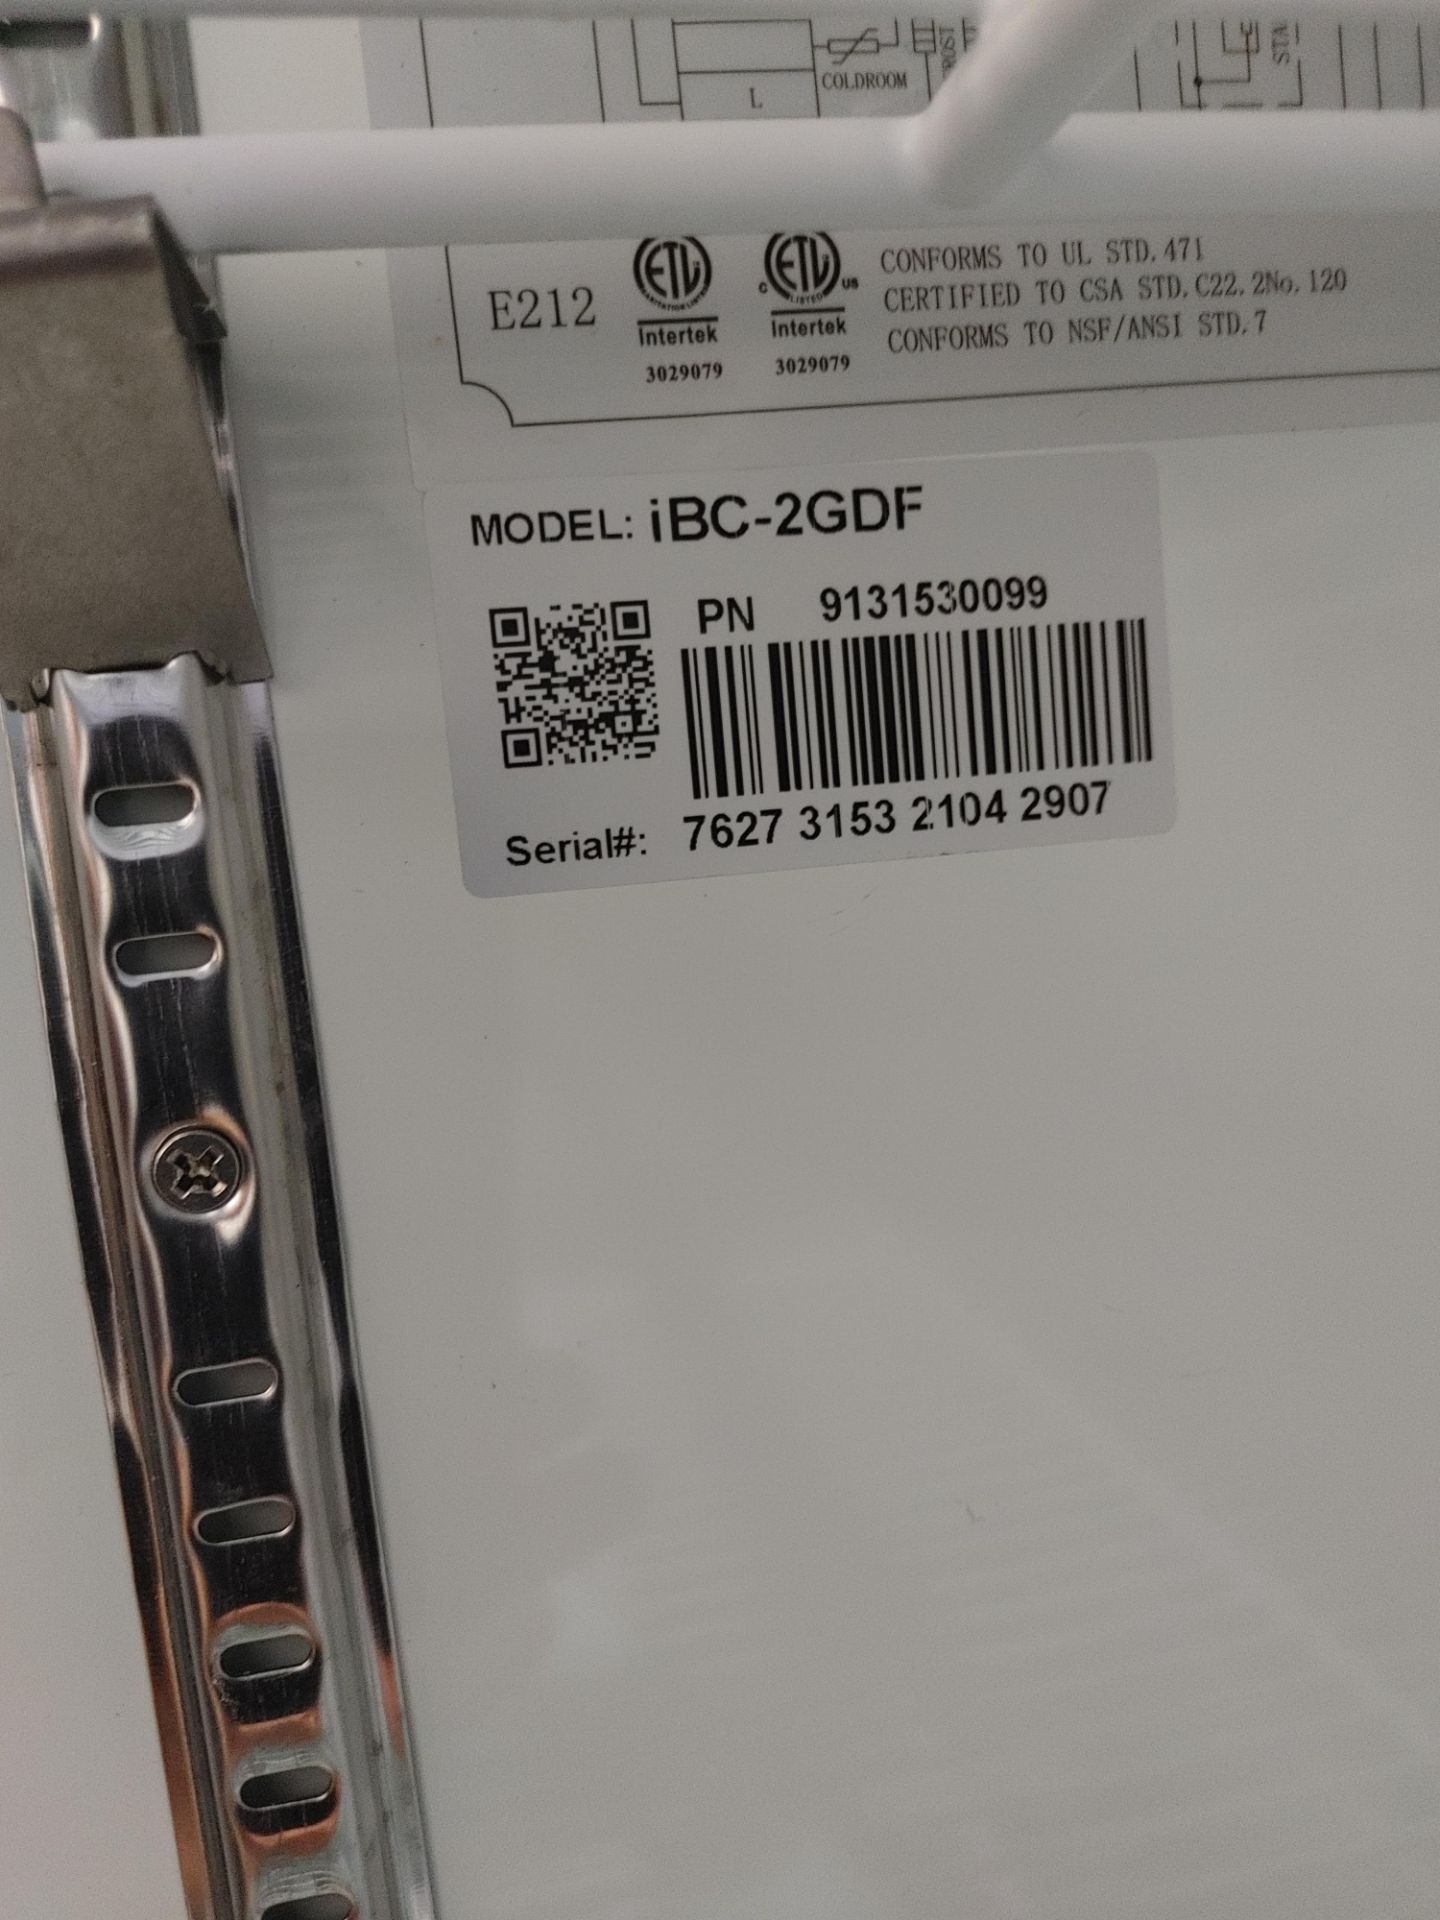 iBEE Cool "iBC-2GDF" 2 Glass Door Freezer S/N 7627 3153 2104 2907 - Image 2 of 2